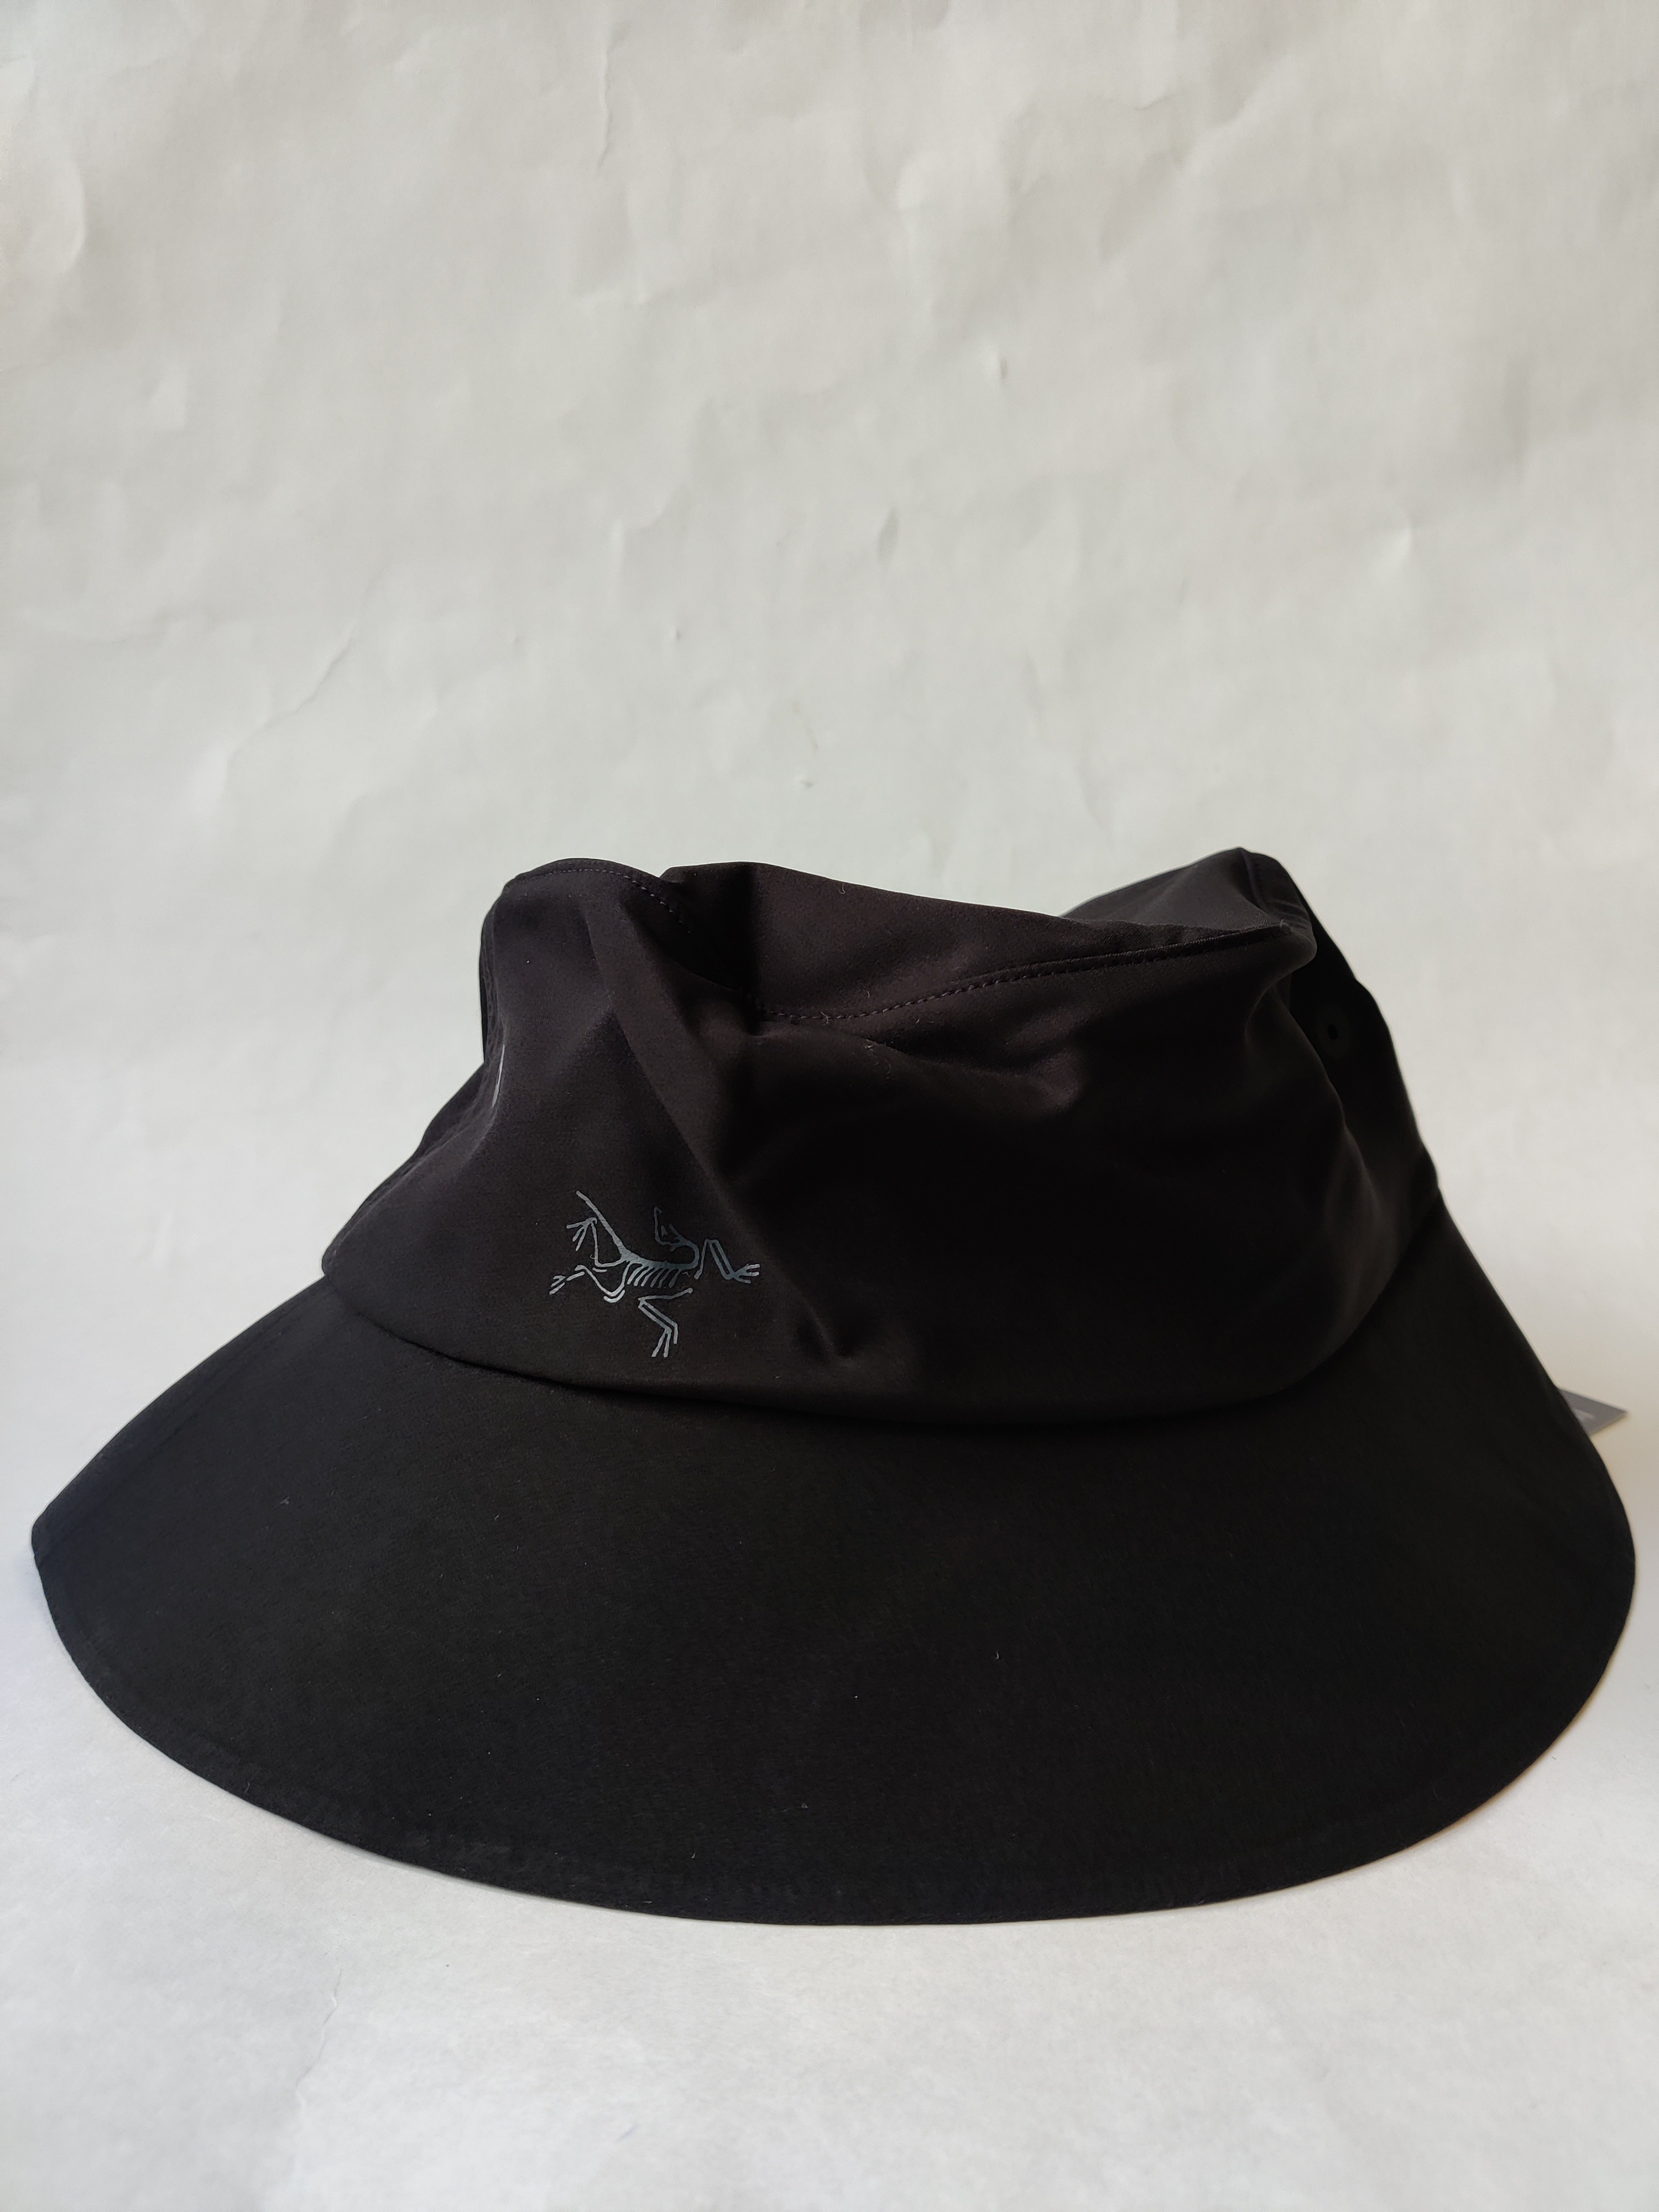 Sinsolo Bucket Hat Size L/XL Sun Cap Summer Black Travel Beach Outdoor Men UPF 50+ - 3